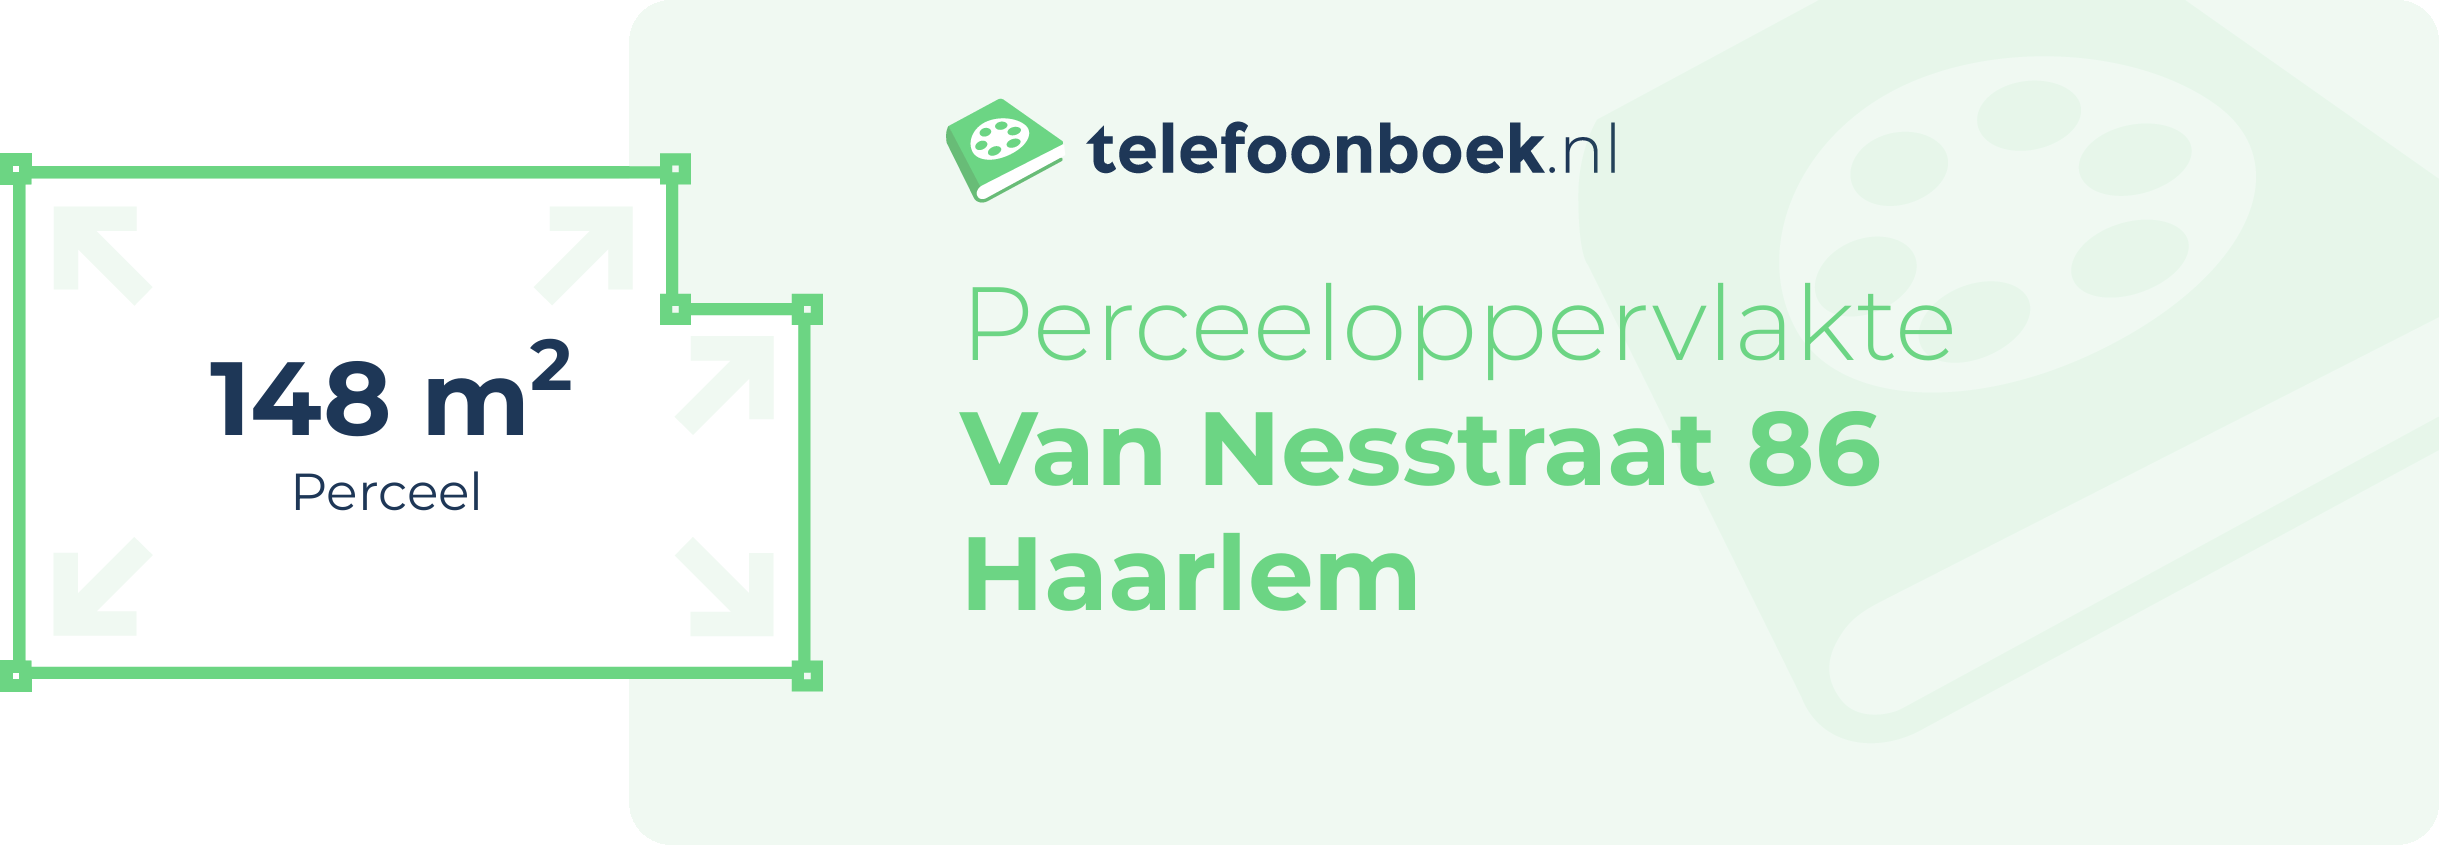 Perceeloppervlakte Van Nesstraat 86 Haarlem